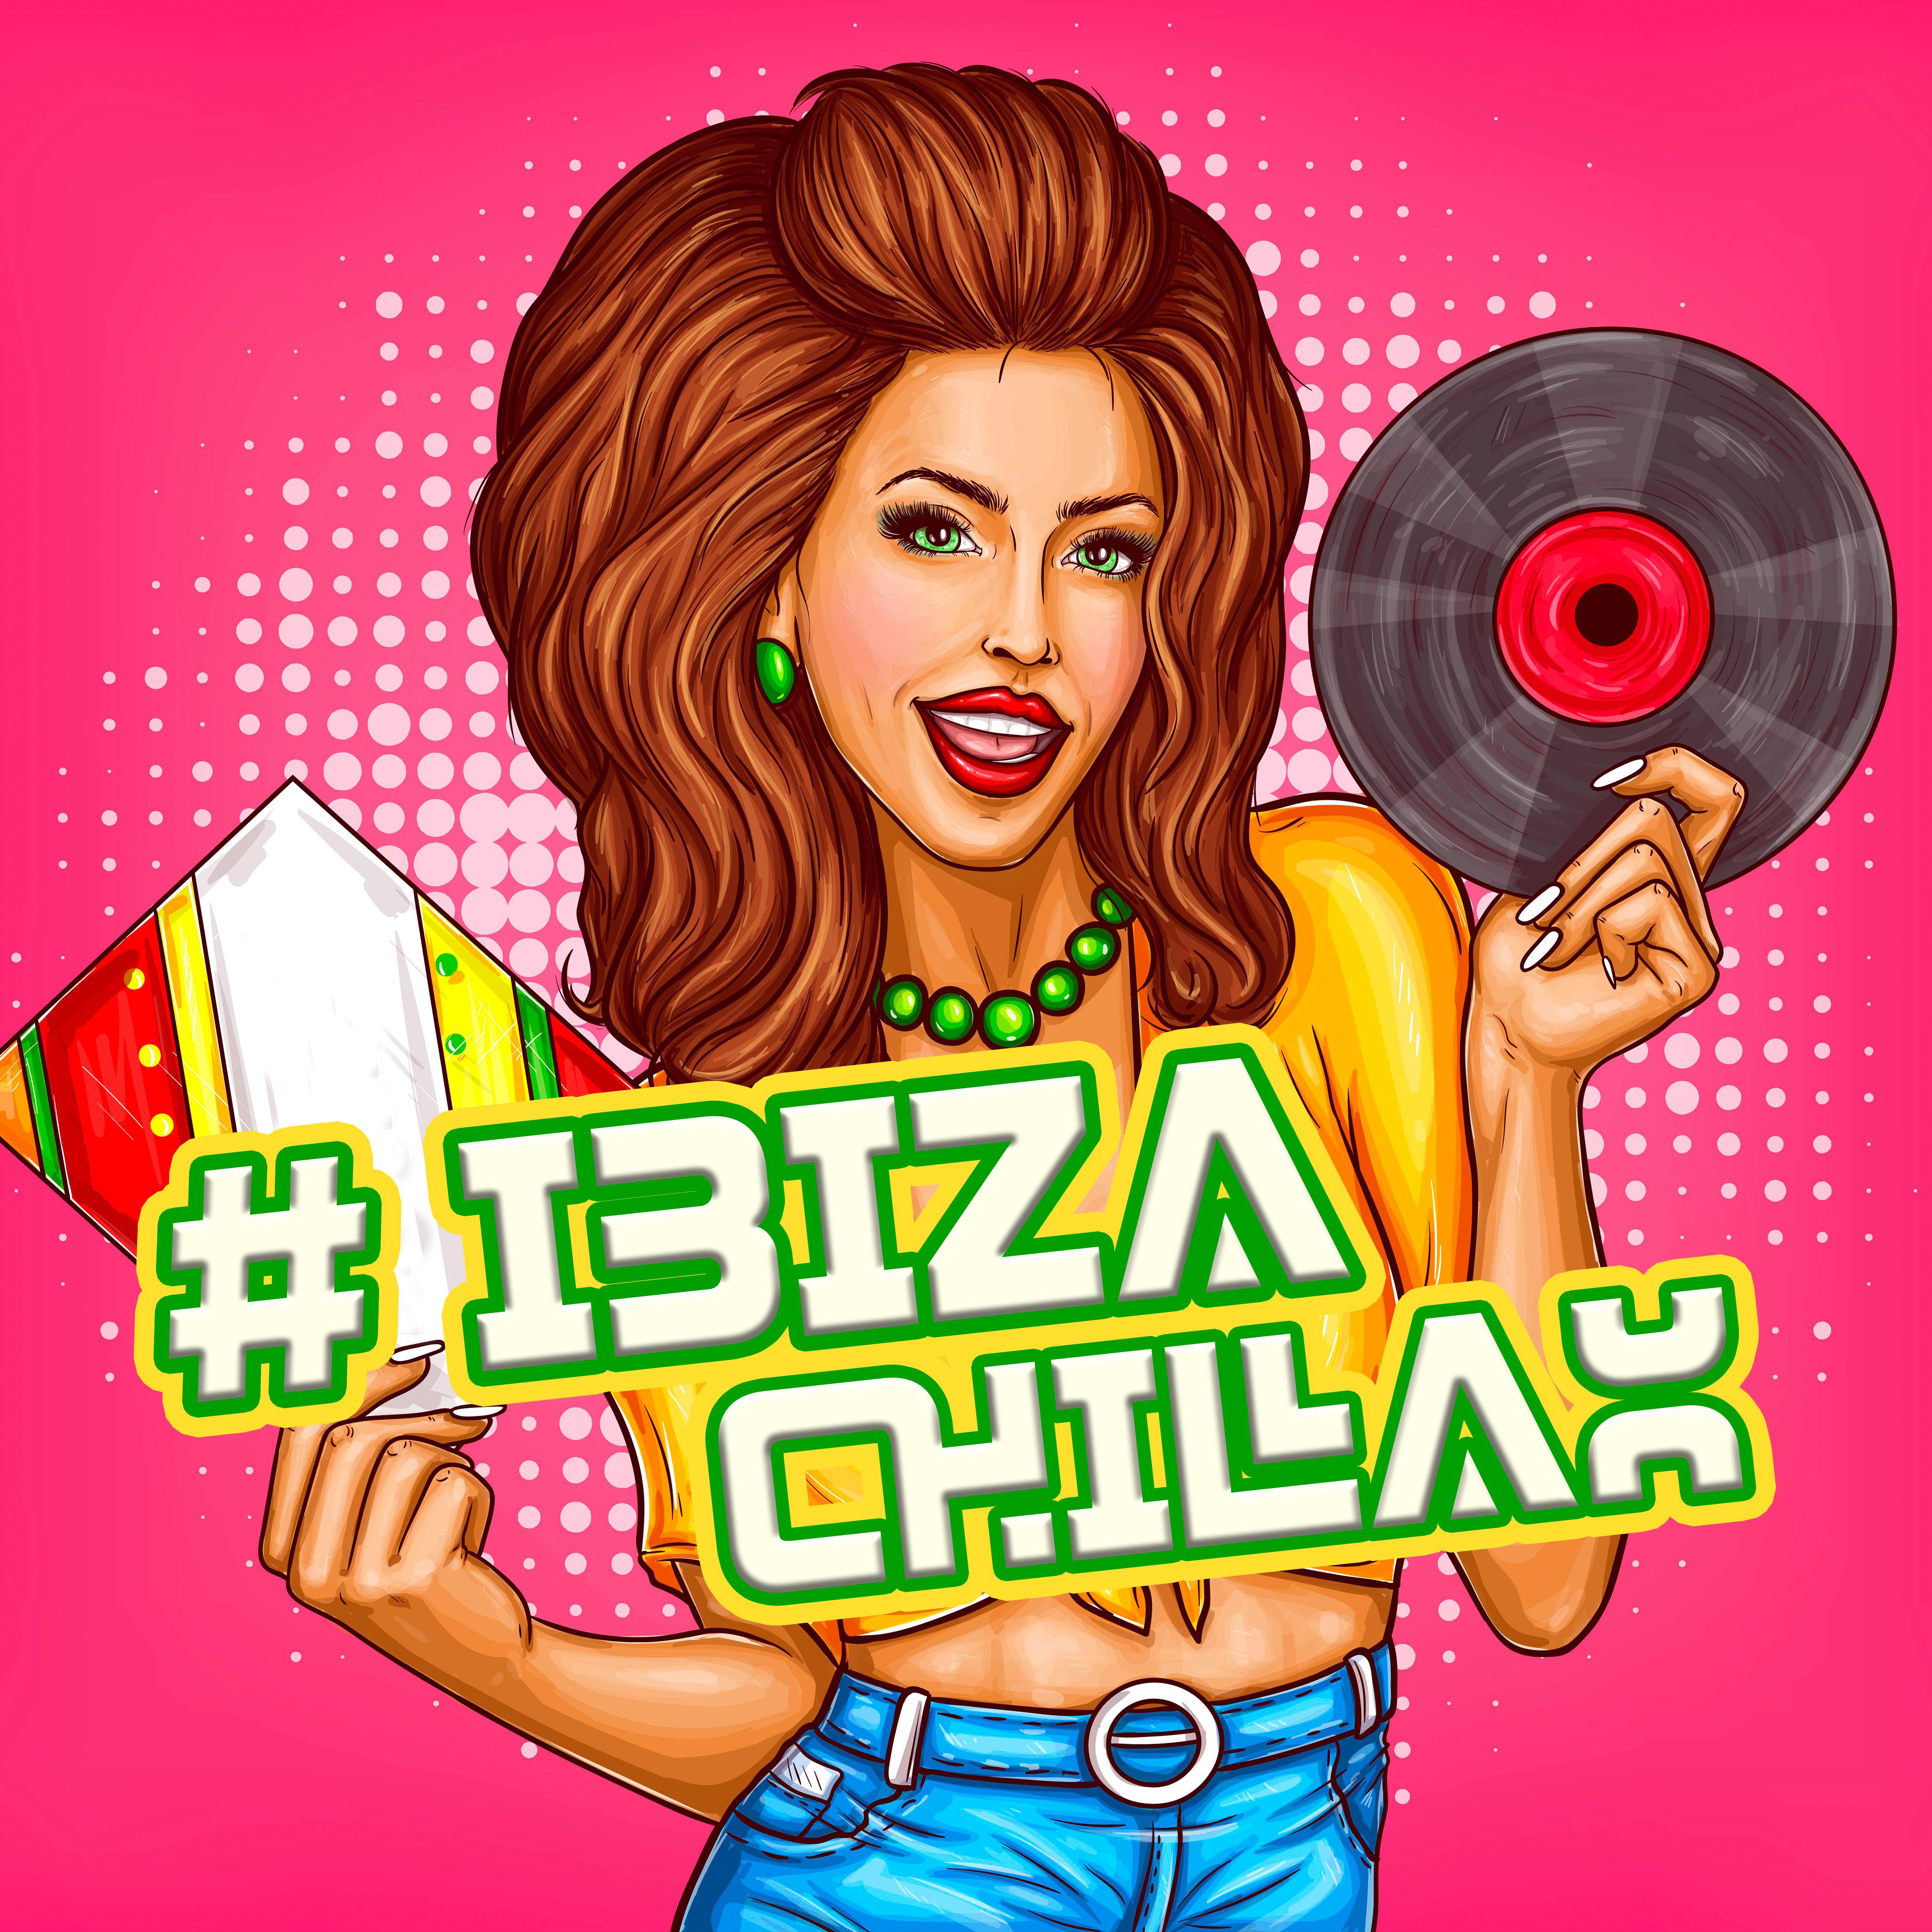 # Ibiza Chillax